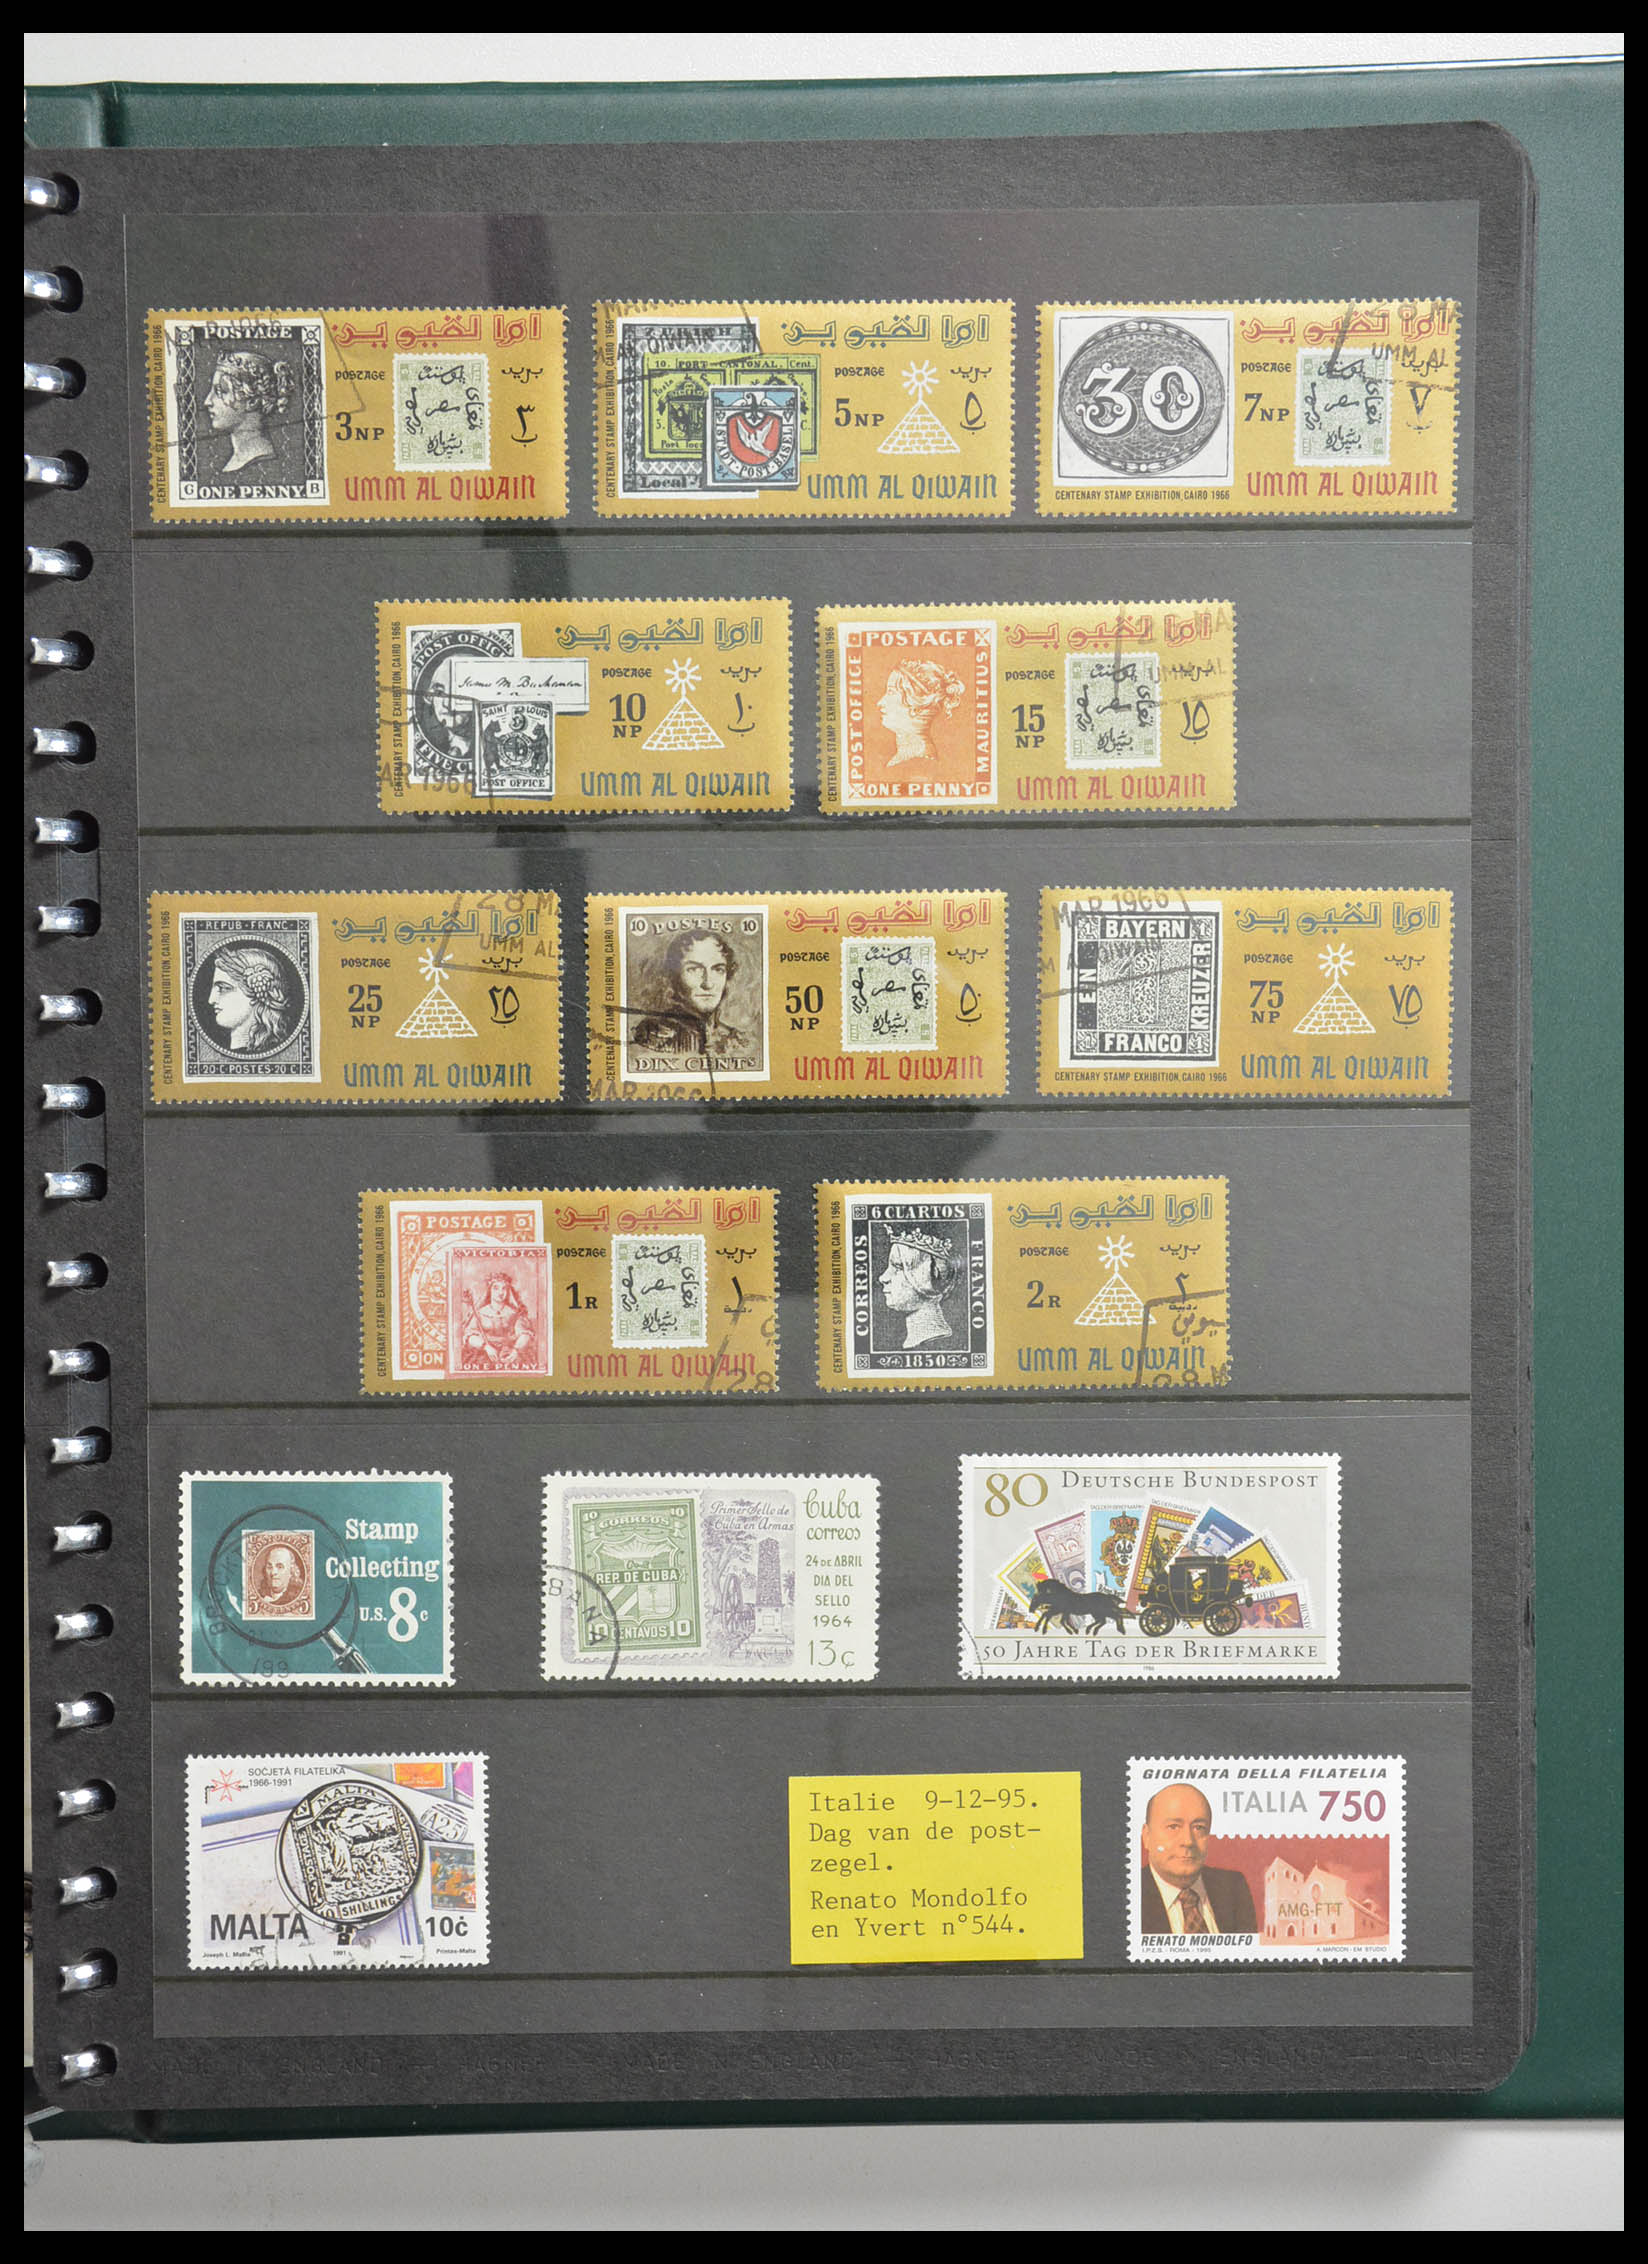 28337 015 - 28337 Postzegel op postzegel 1840-2001.